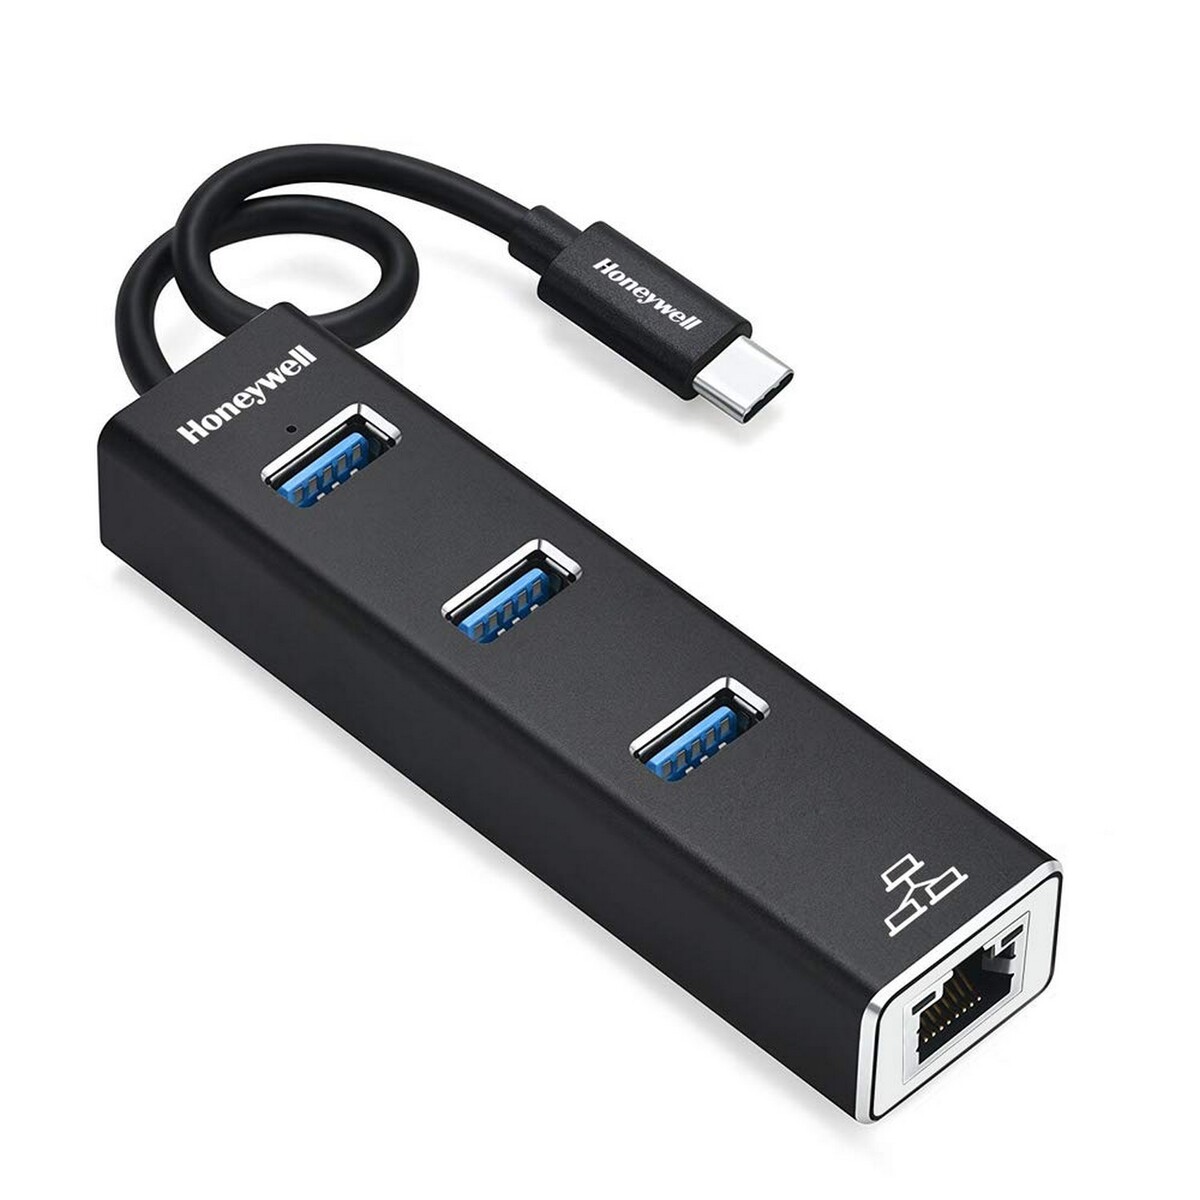 Honeywell USB-C to USB 3.0 + Ethernet Adapter